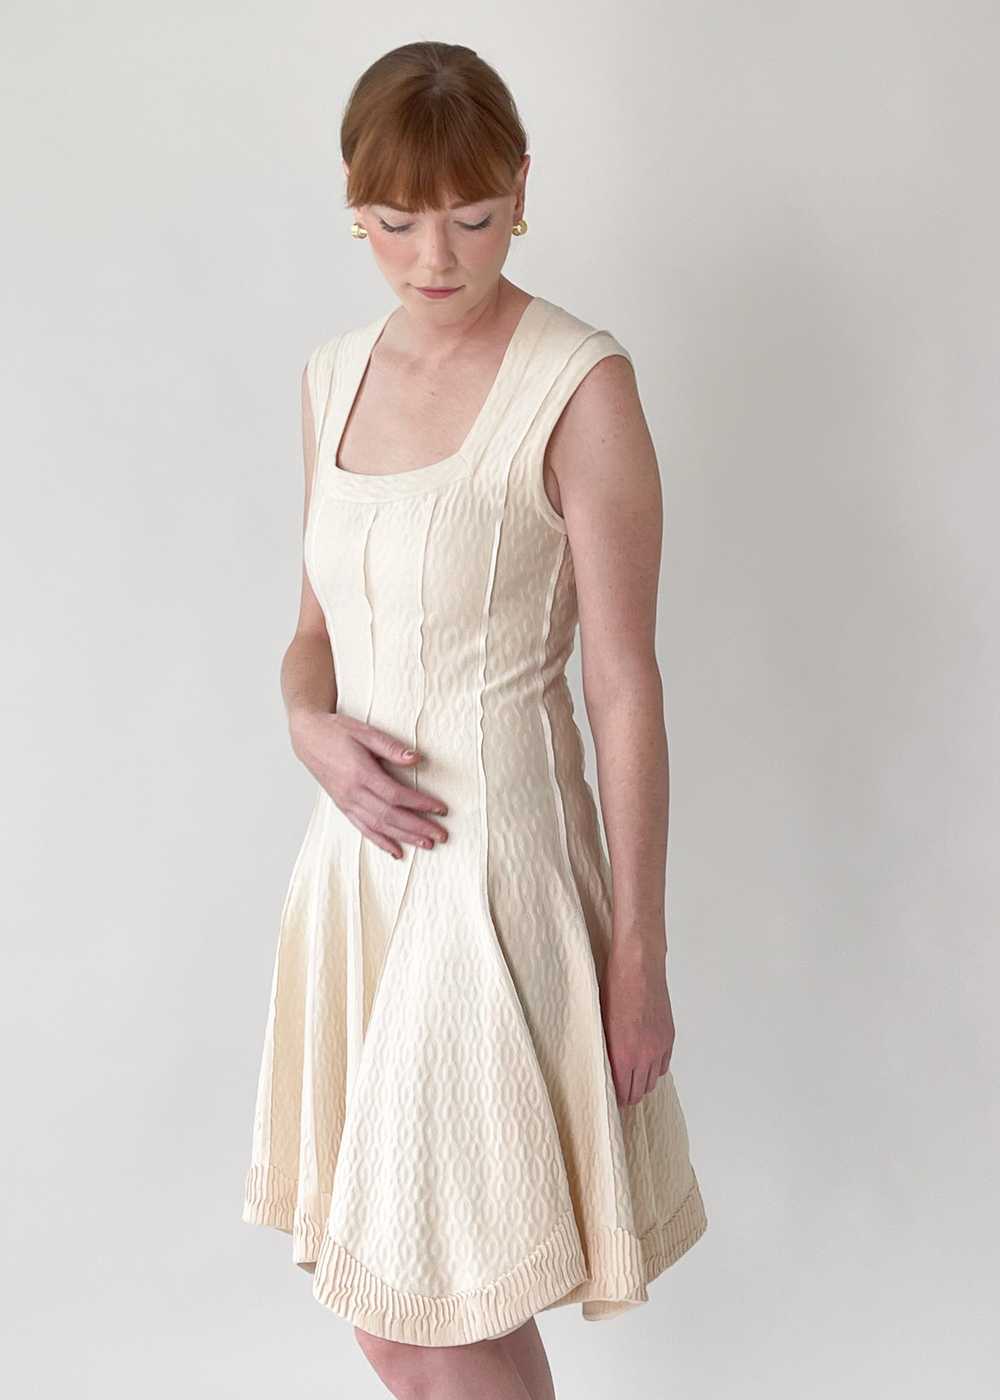 Alaia Textured Knit Dress - image 5